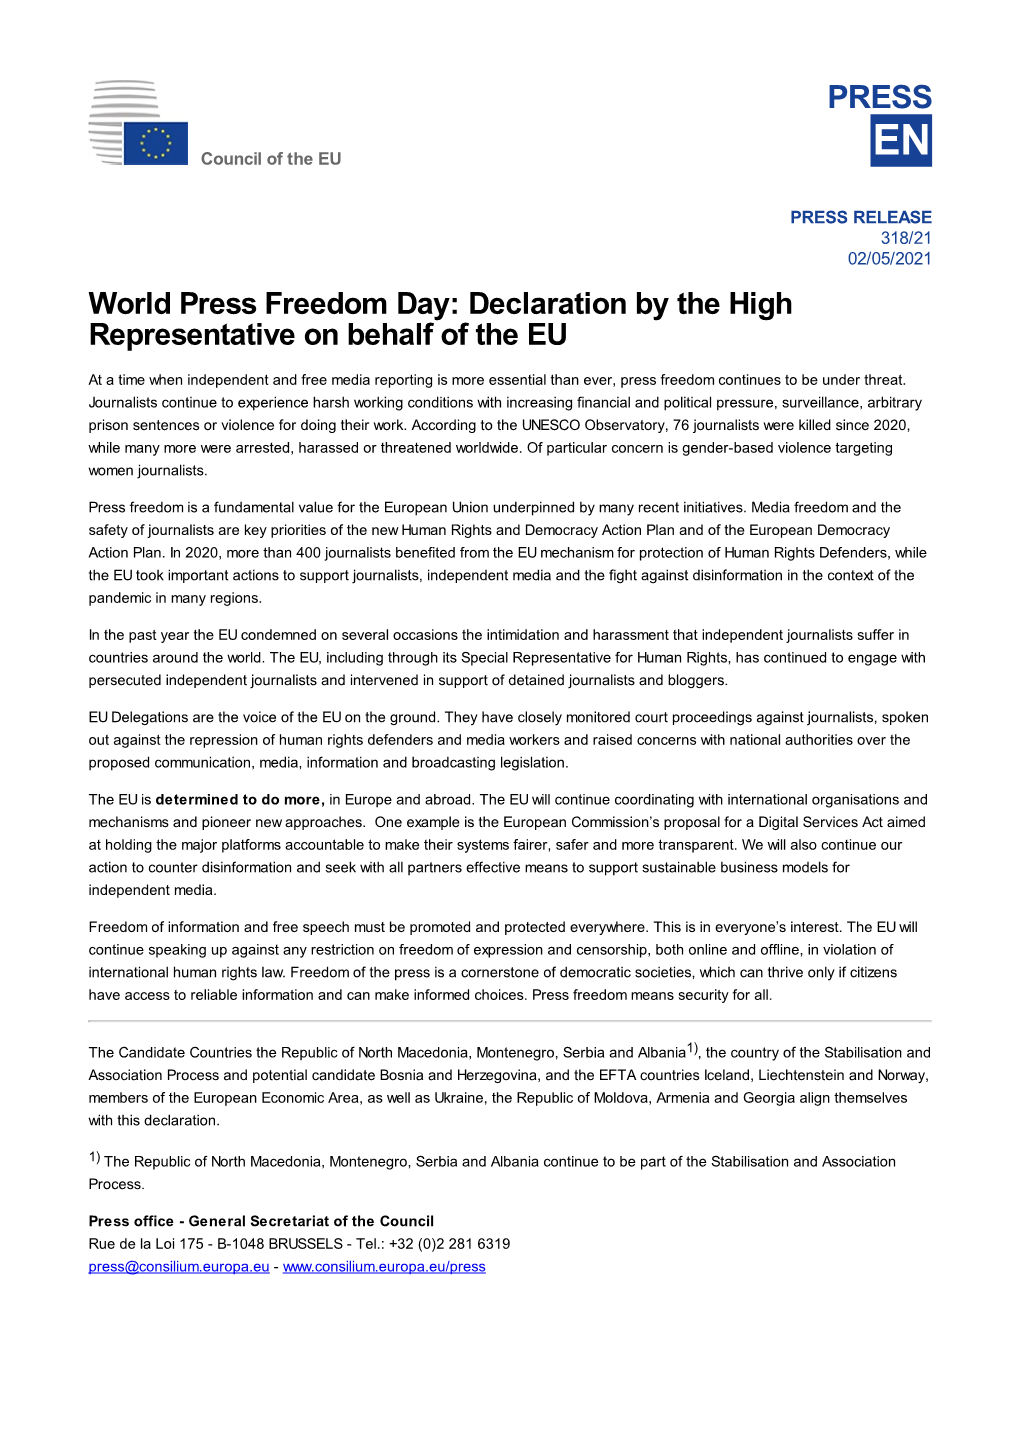 World Press Freedom Day: Declaration by the High Representative on Behalf of the EU